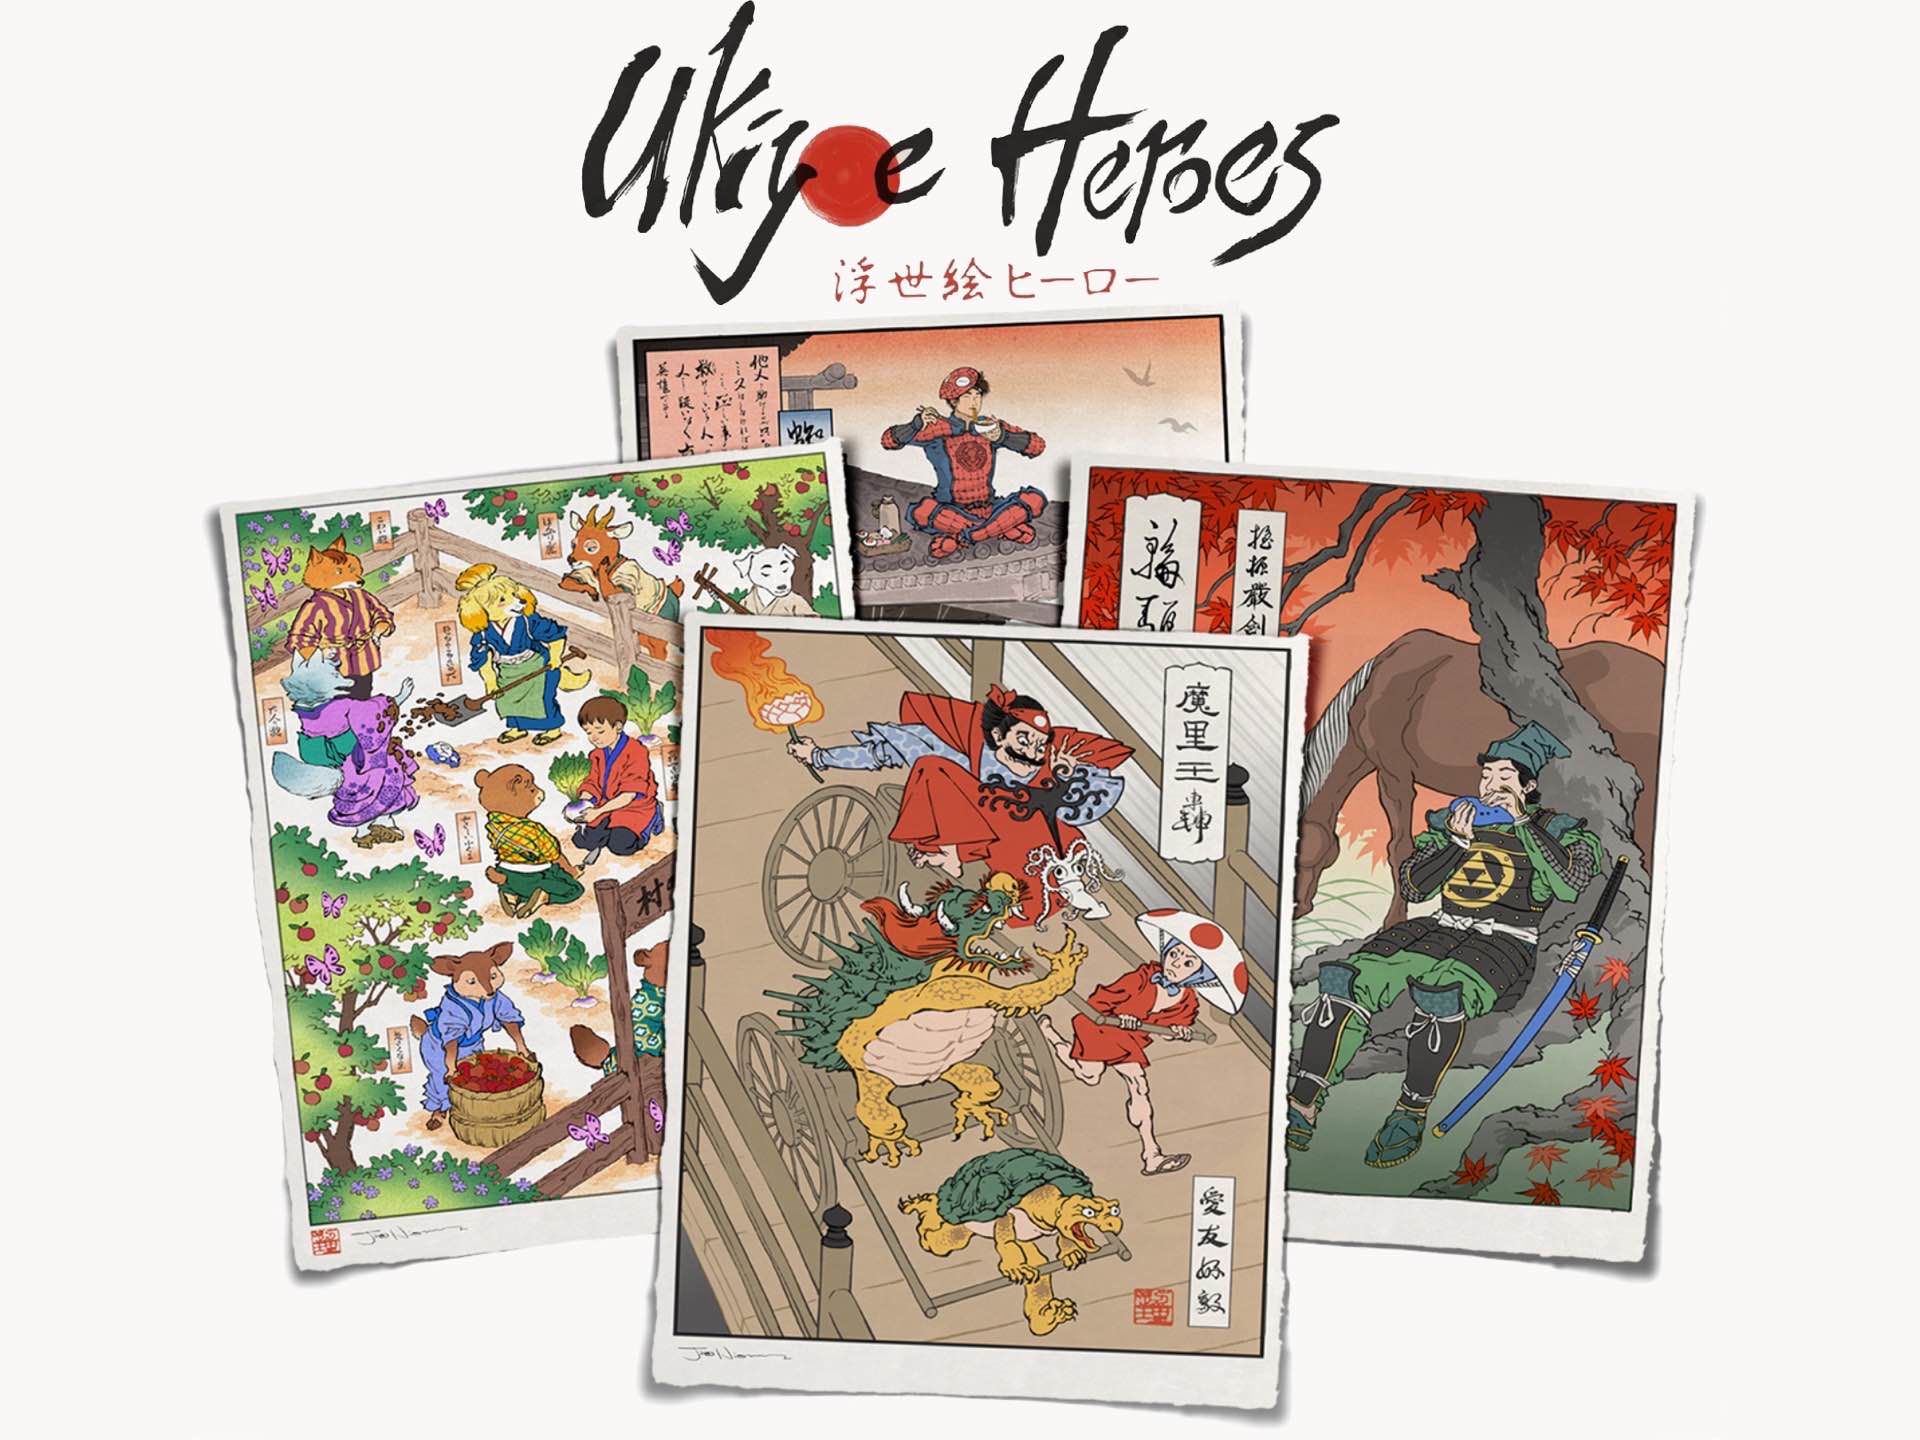 ukiyo-e-heroes-video-game-woodblock-prints